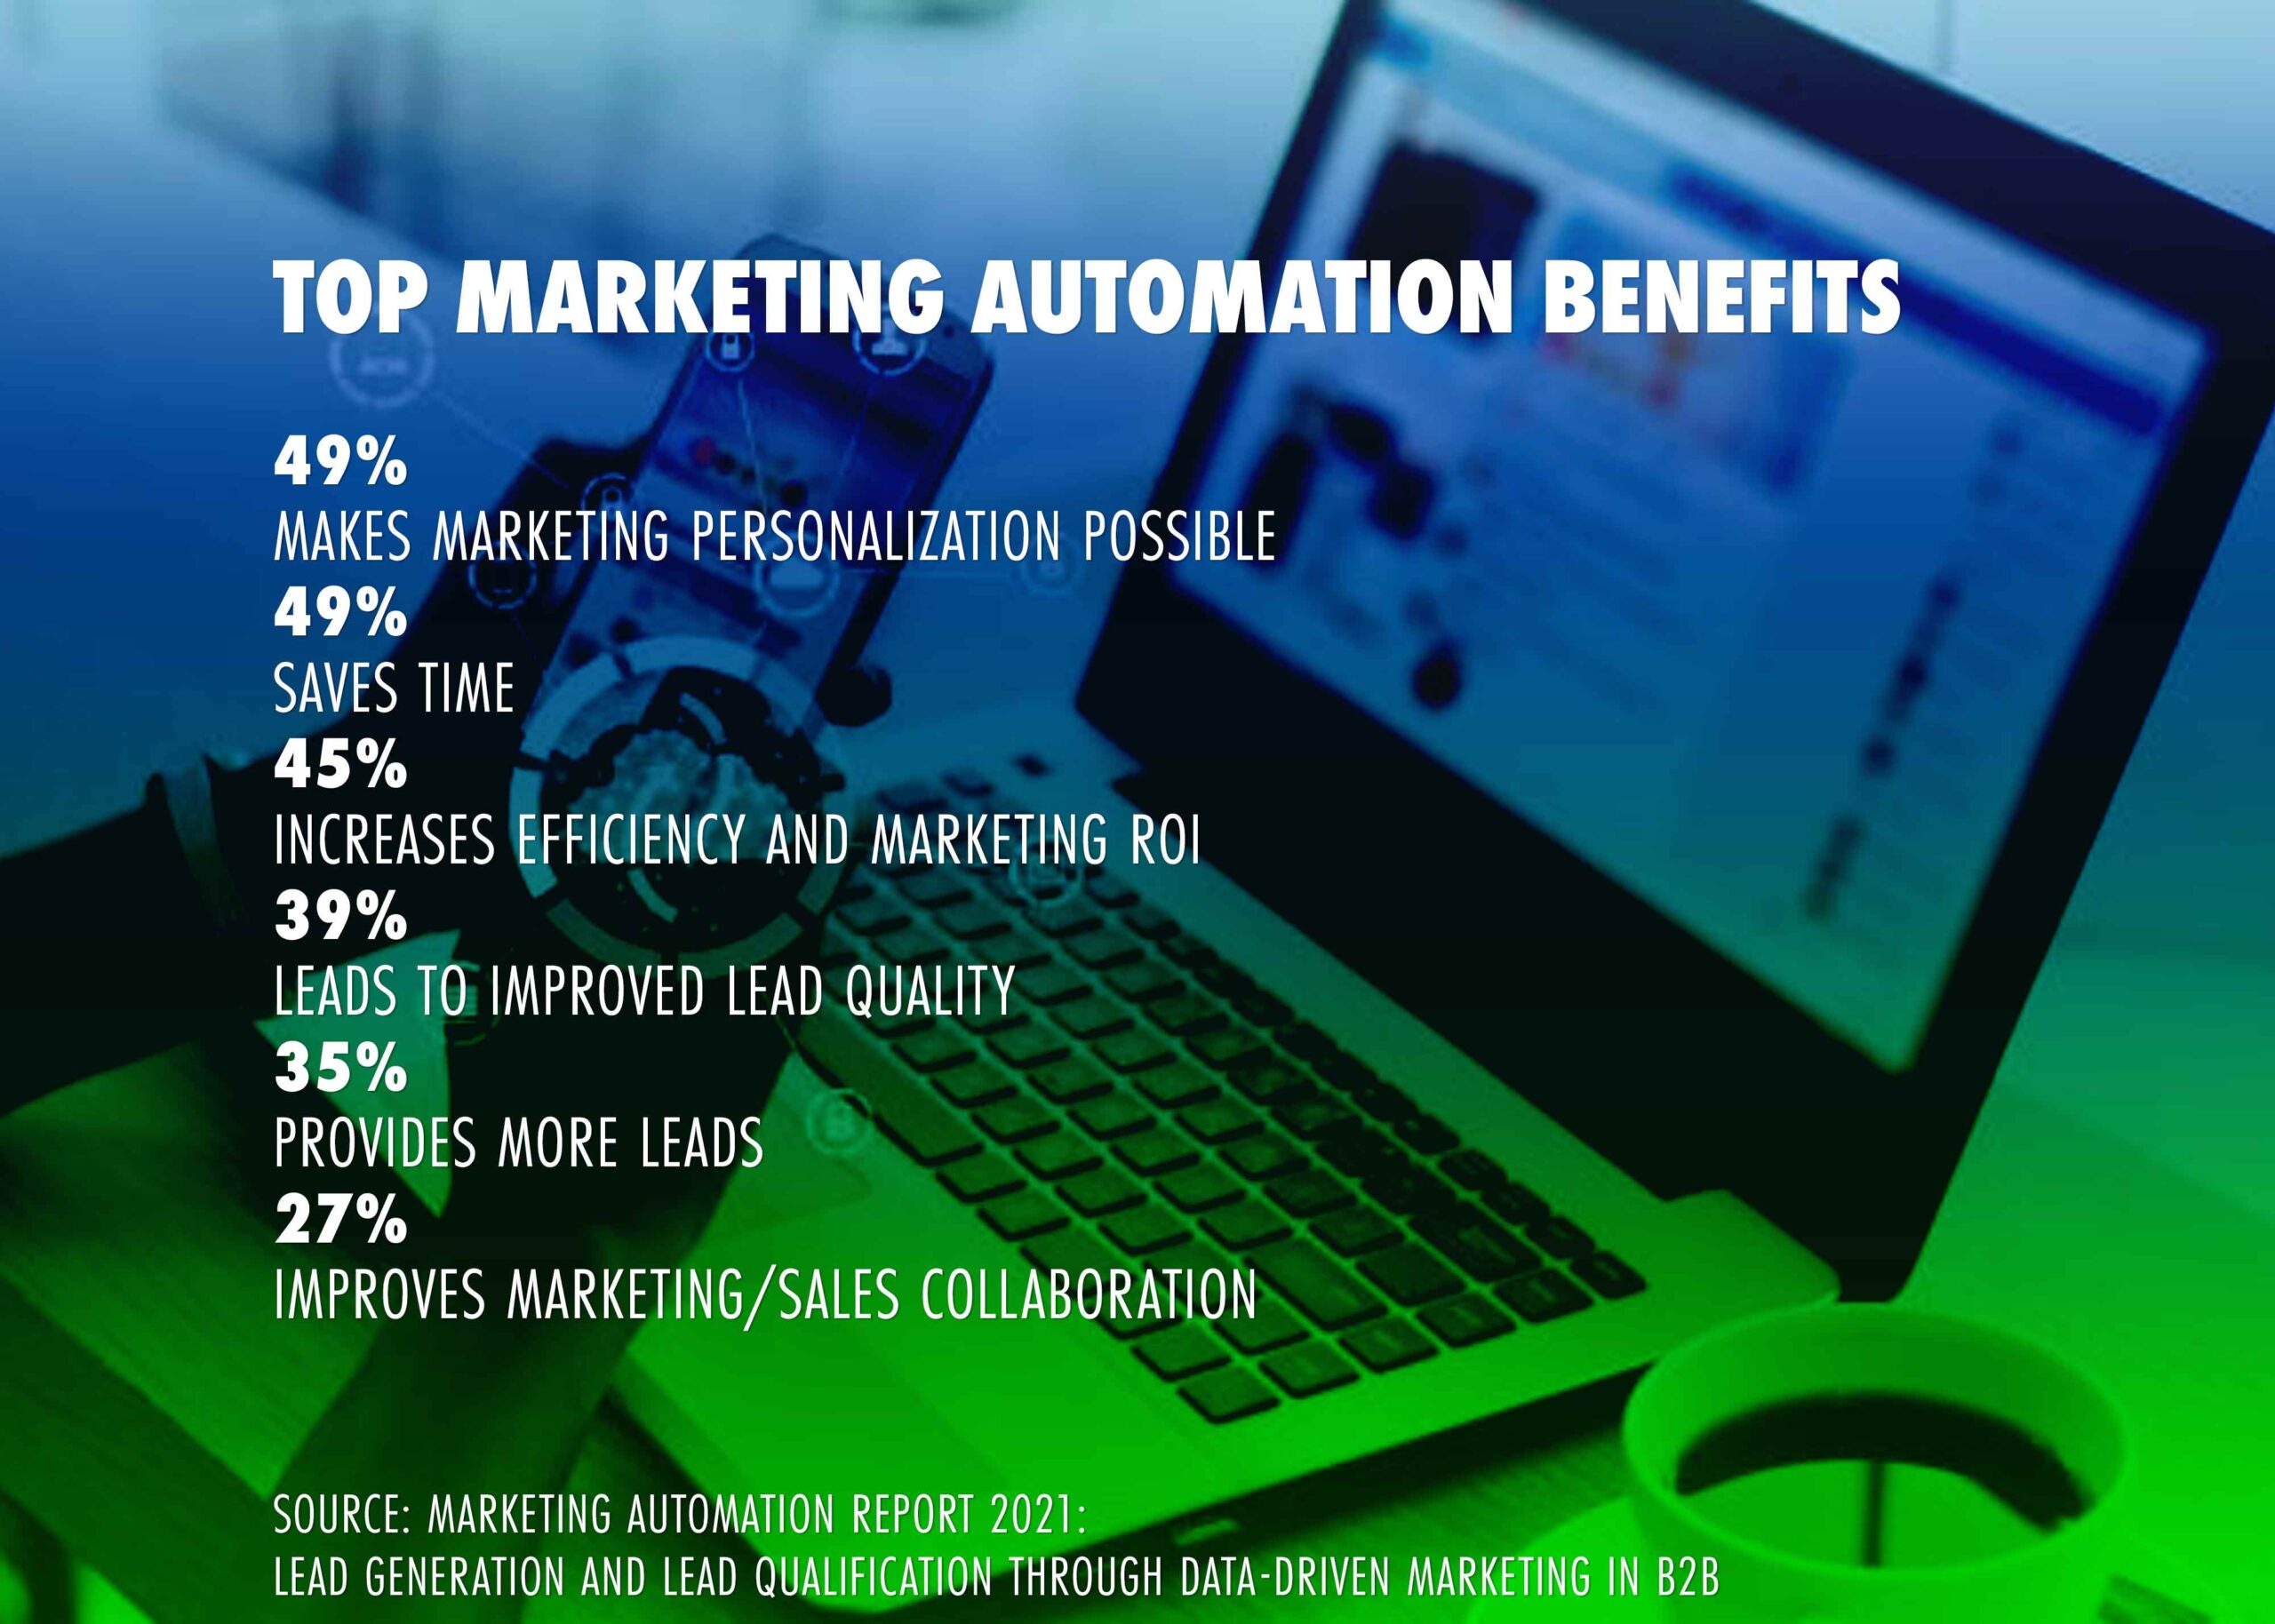 Top marketing automation benefits